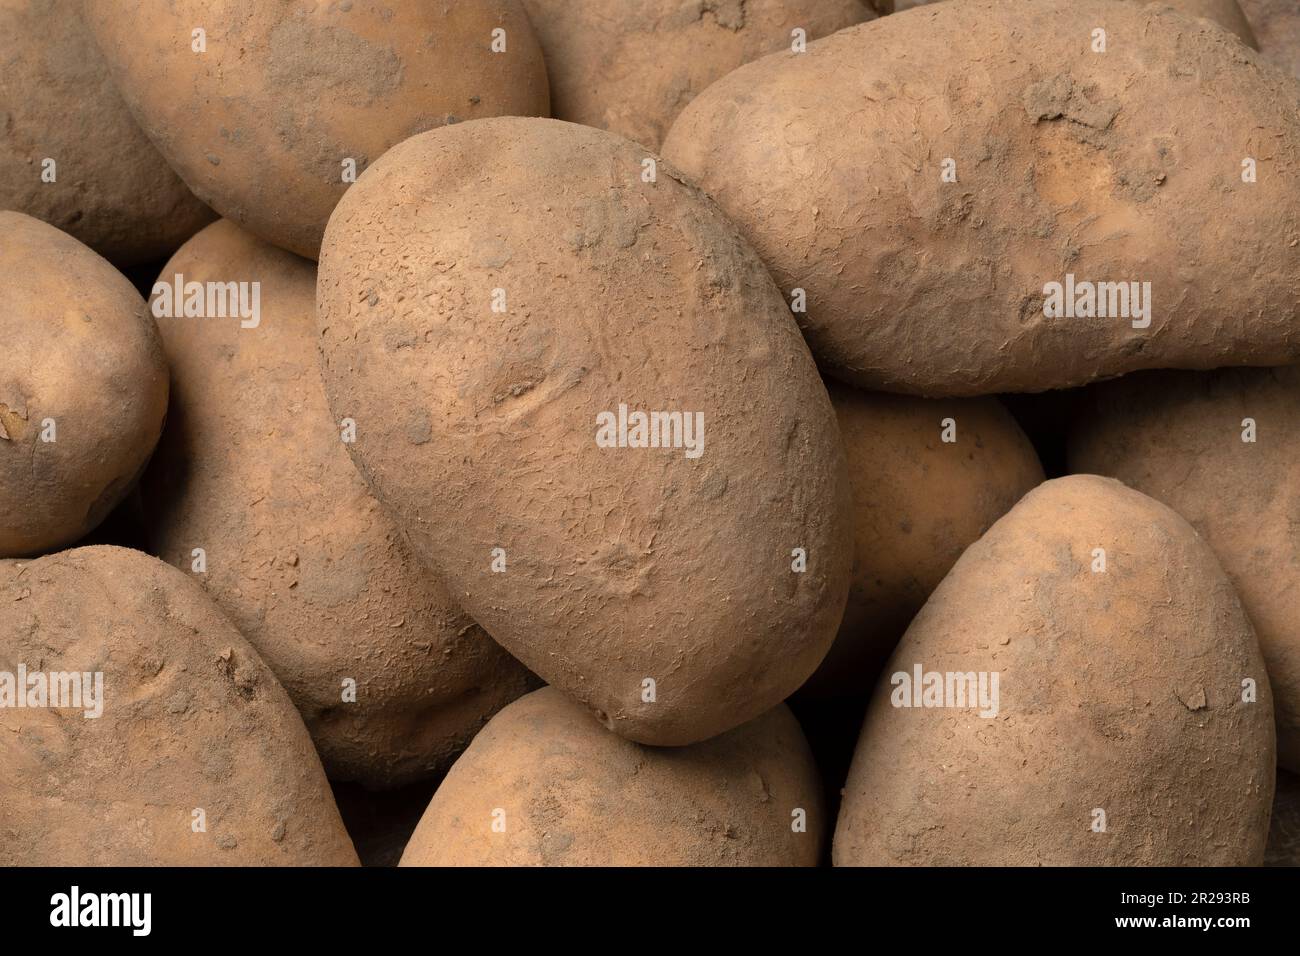 Dutch variety potato called Bintje close up full frame as background Stock Photo